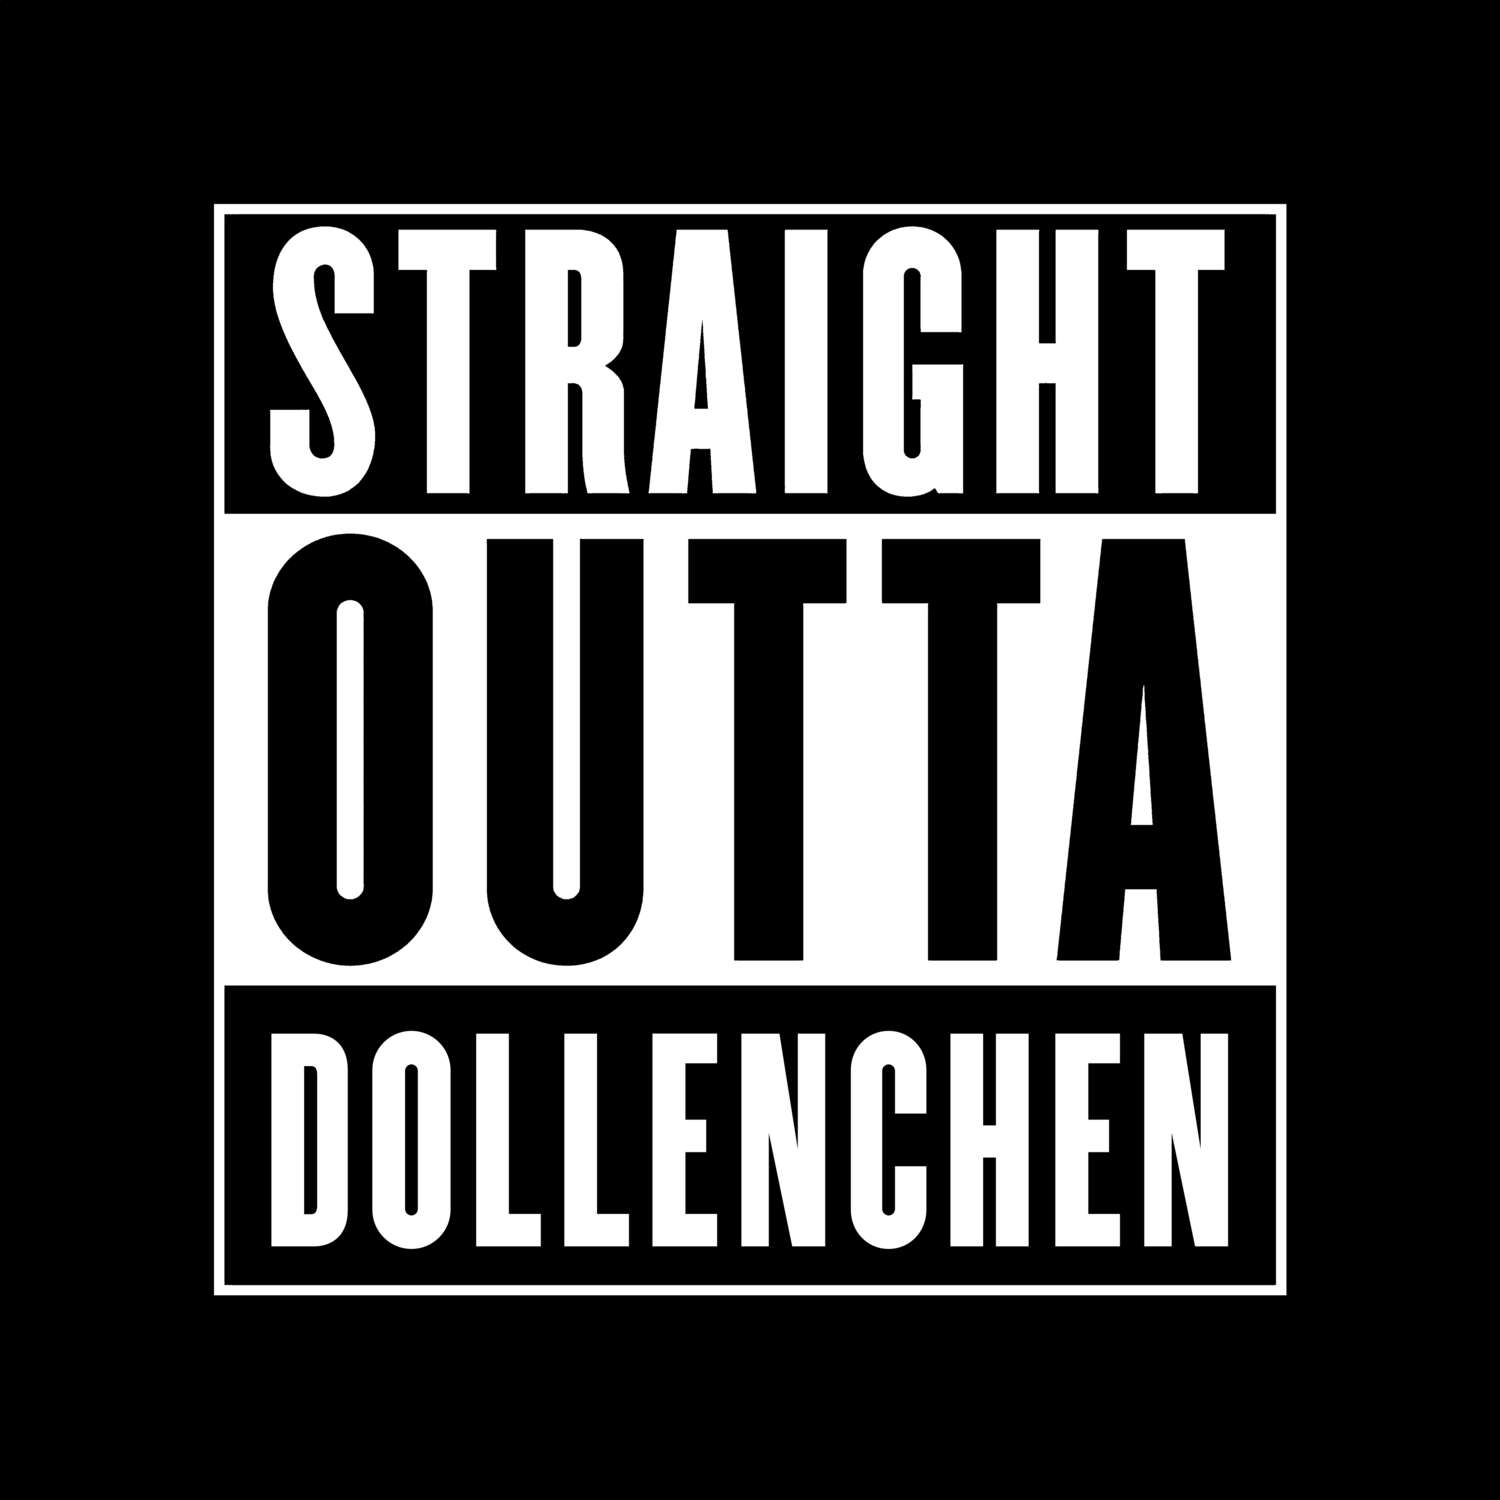 Dollenchen T-Shirt »Straight Outta«